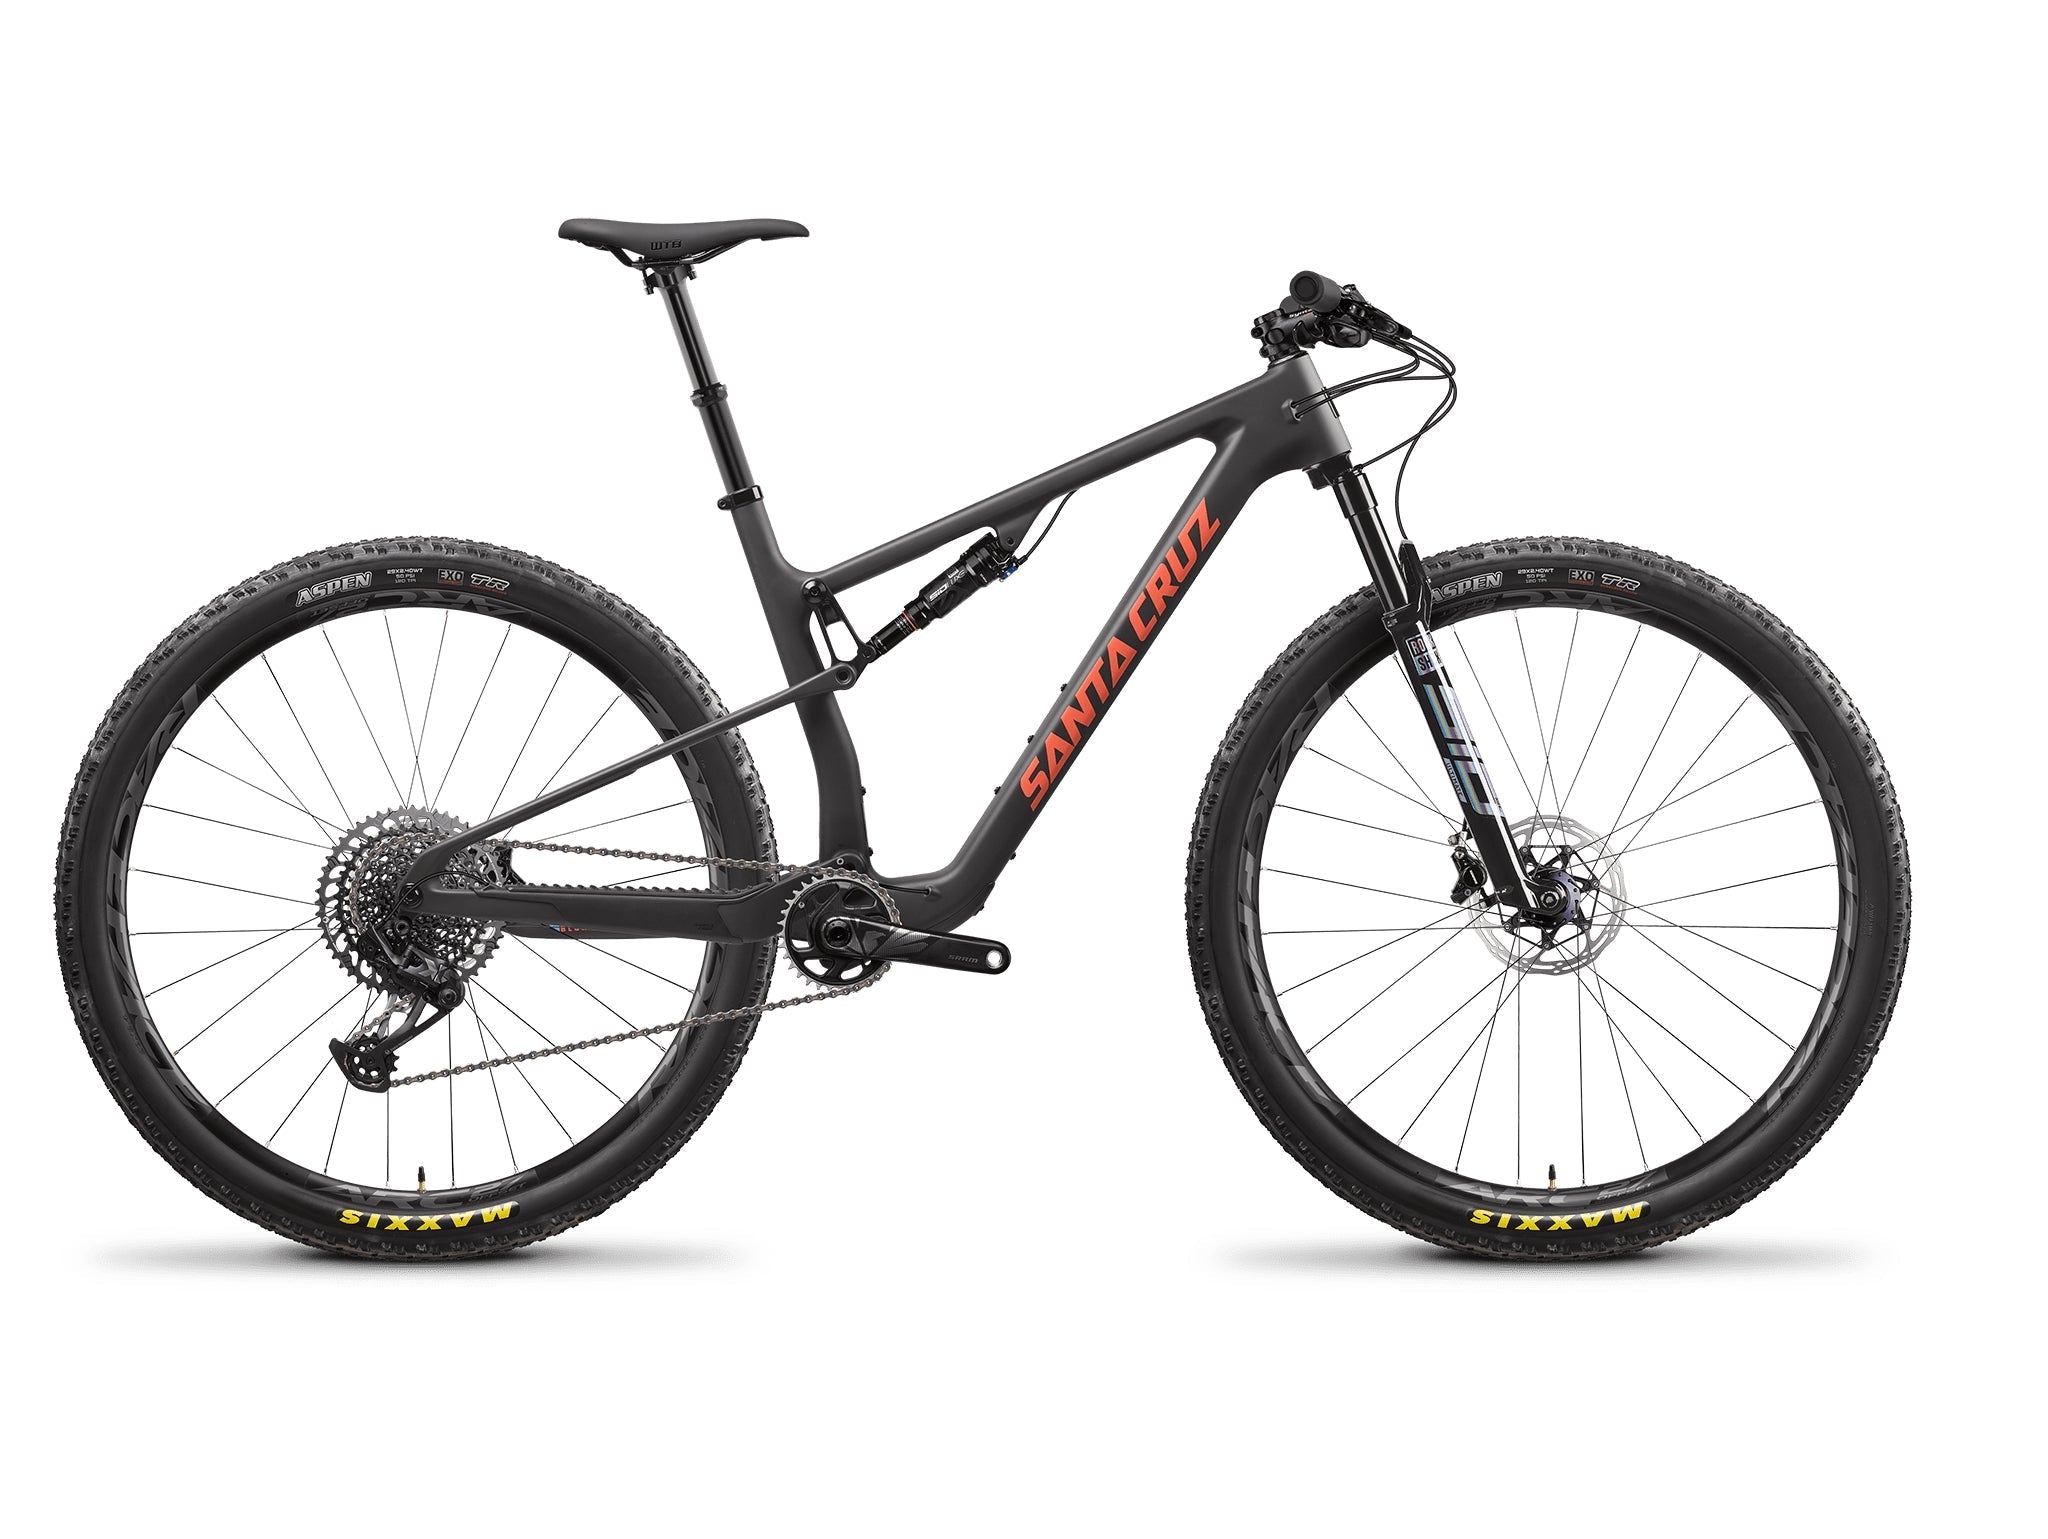 2021 Santa Cruz Blur XC Carbon CC 29 Complete Bike - Dark Matter 